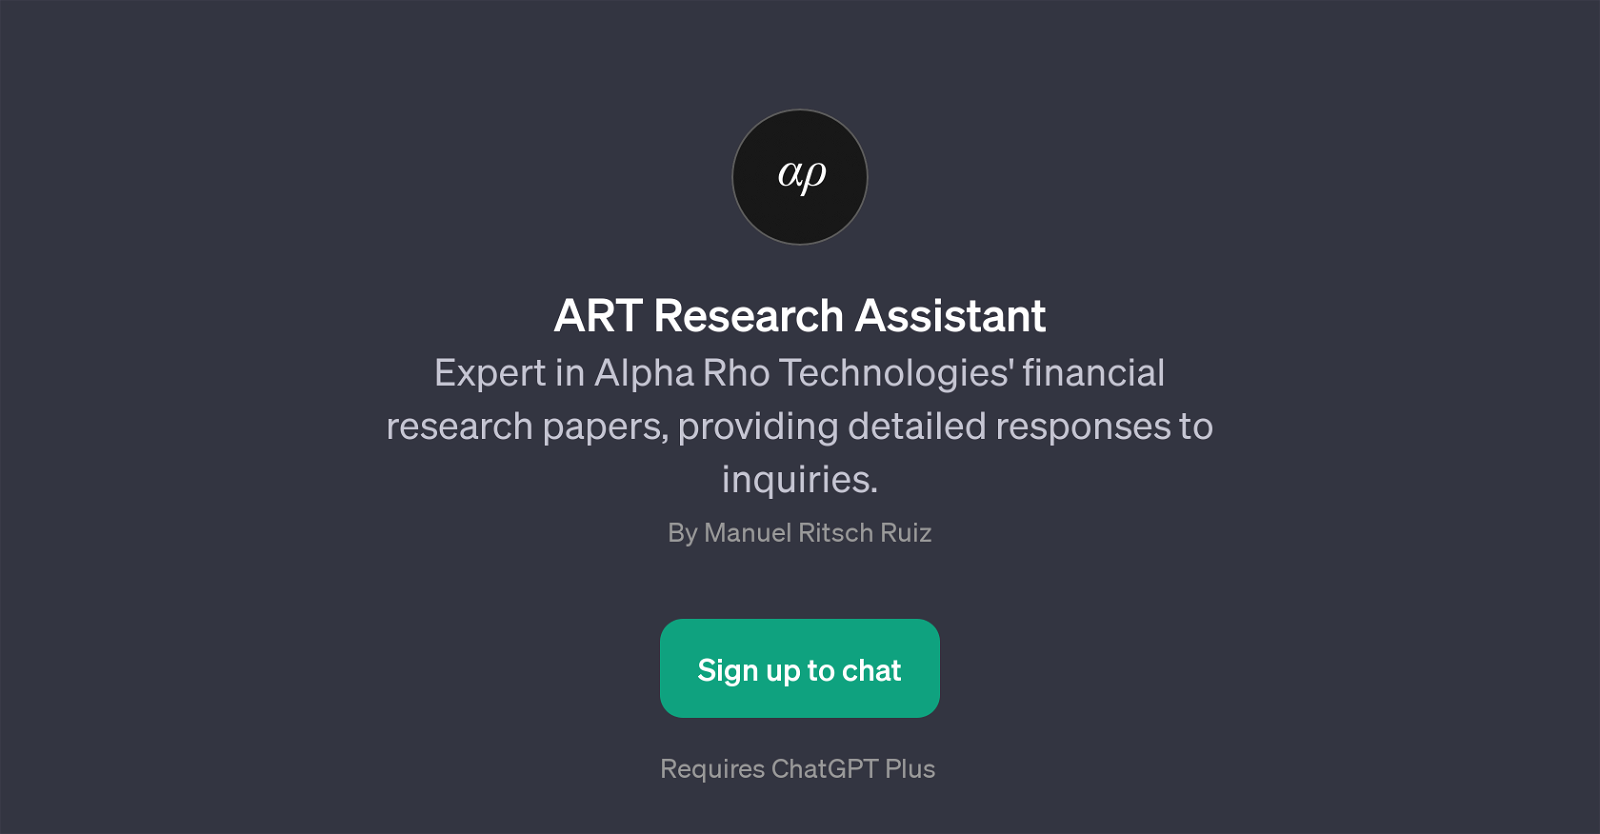 ART Research Assistant website